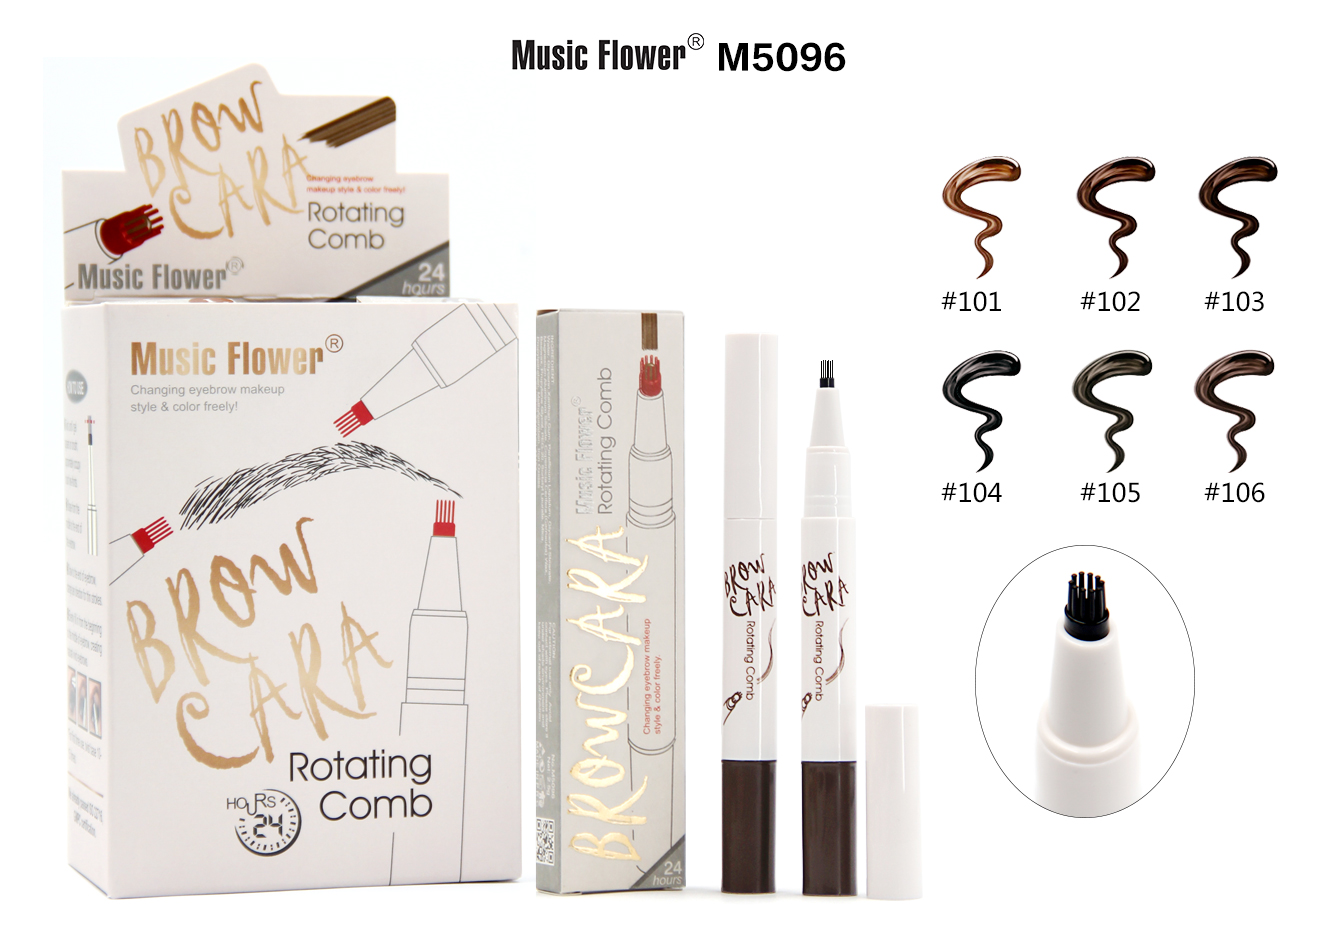 Music Flower BROW CARA ROTATING COMB M5096